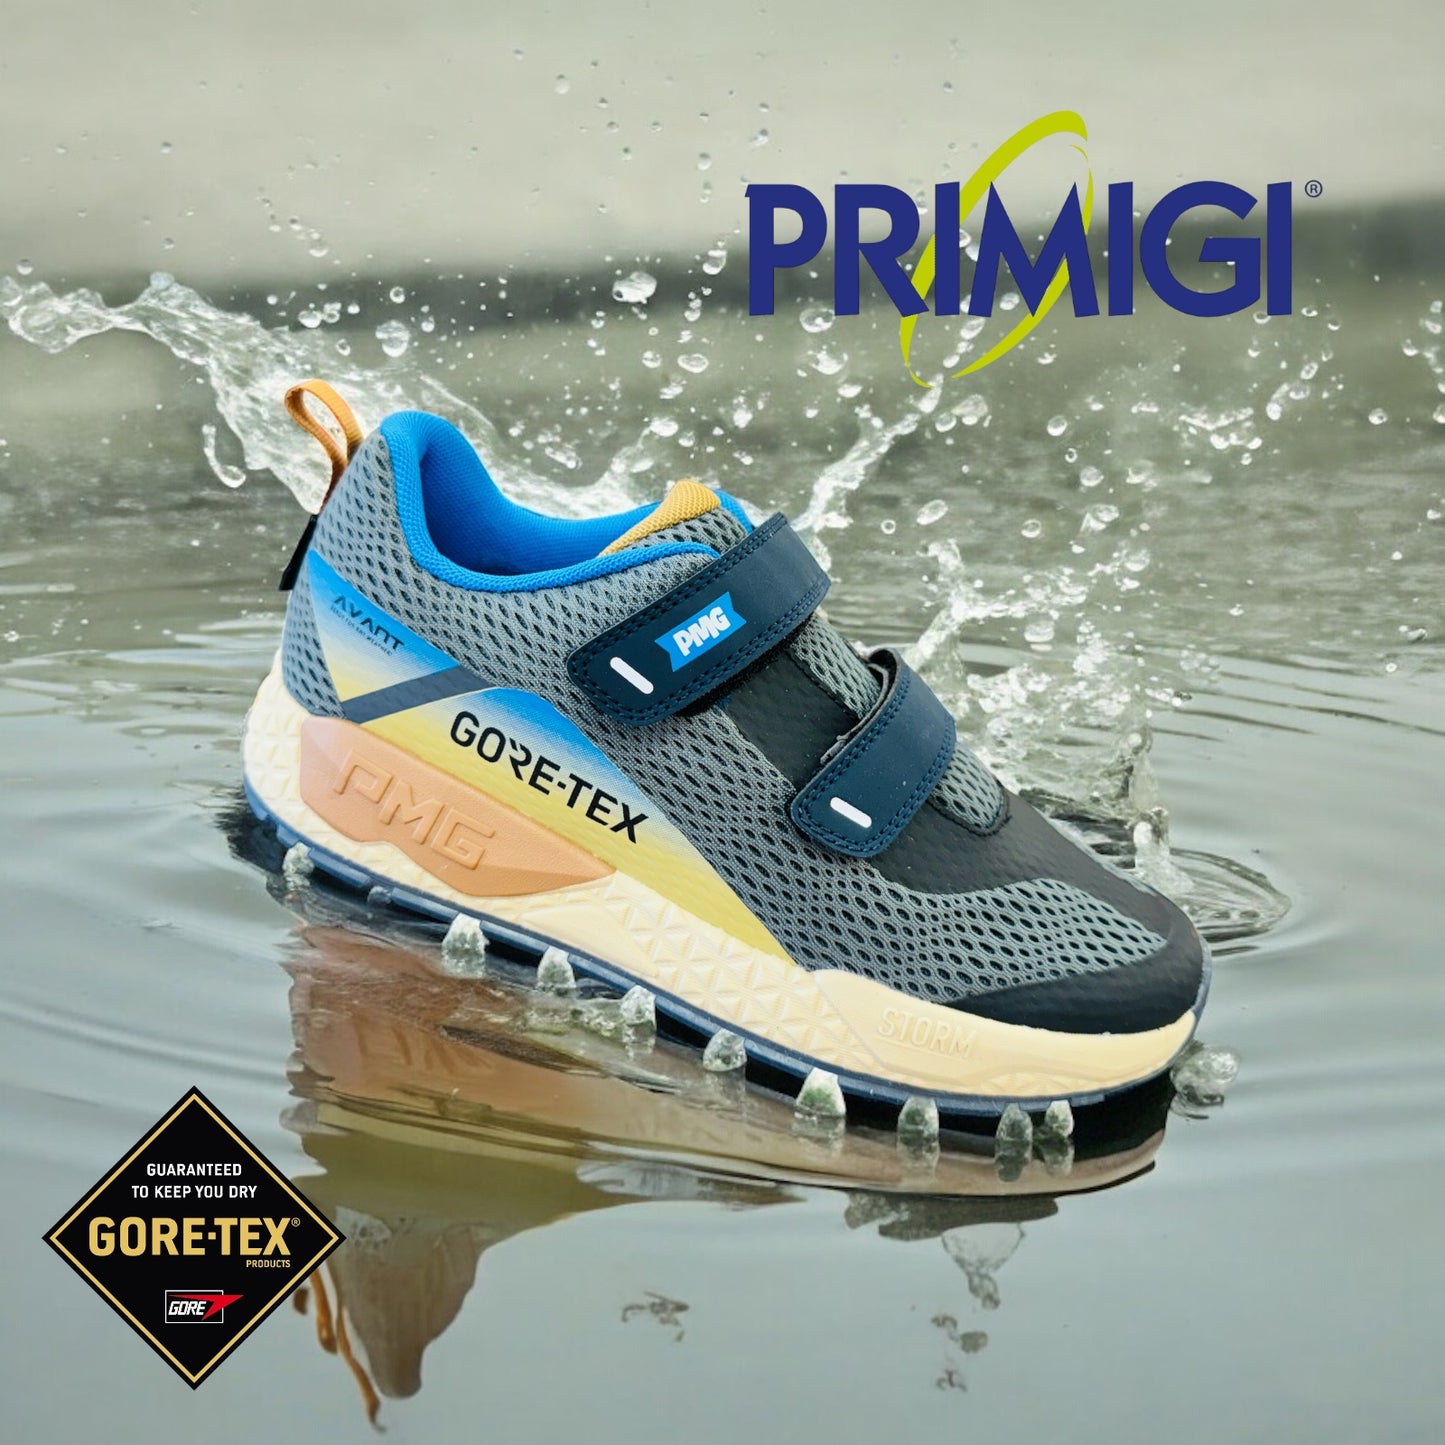 Primigi goretex trainer navy grey waterproof